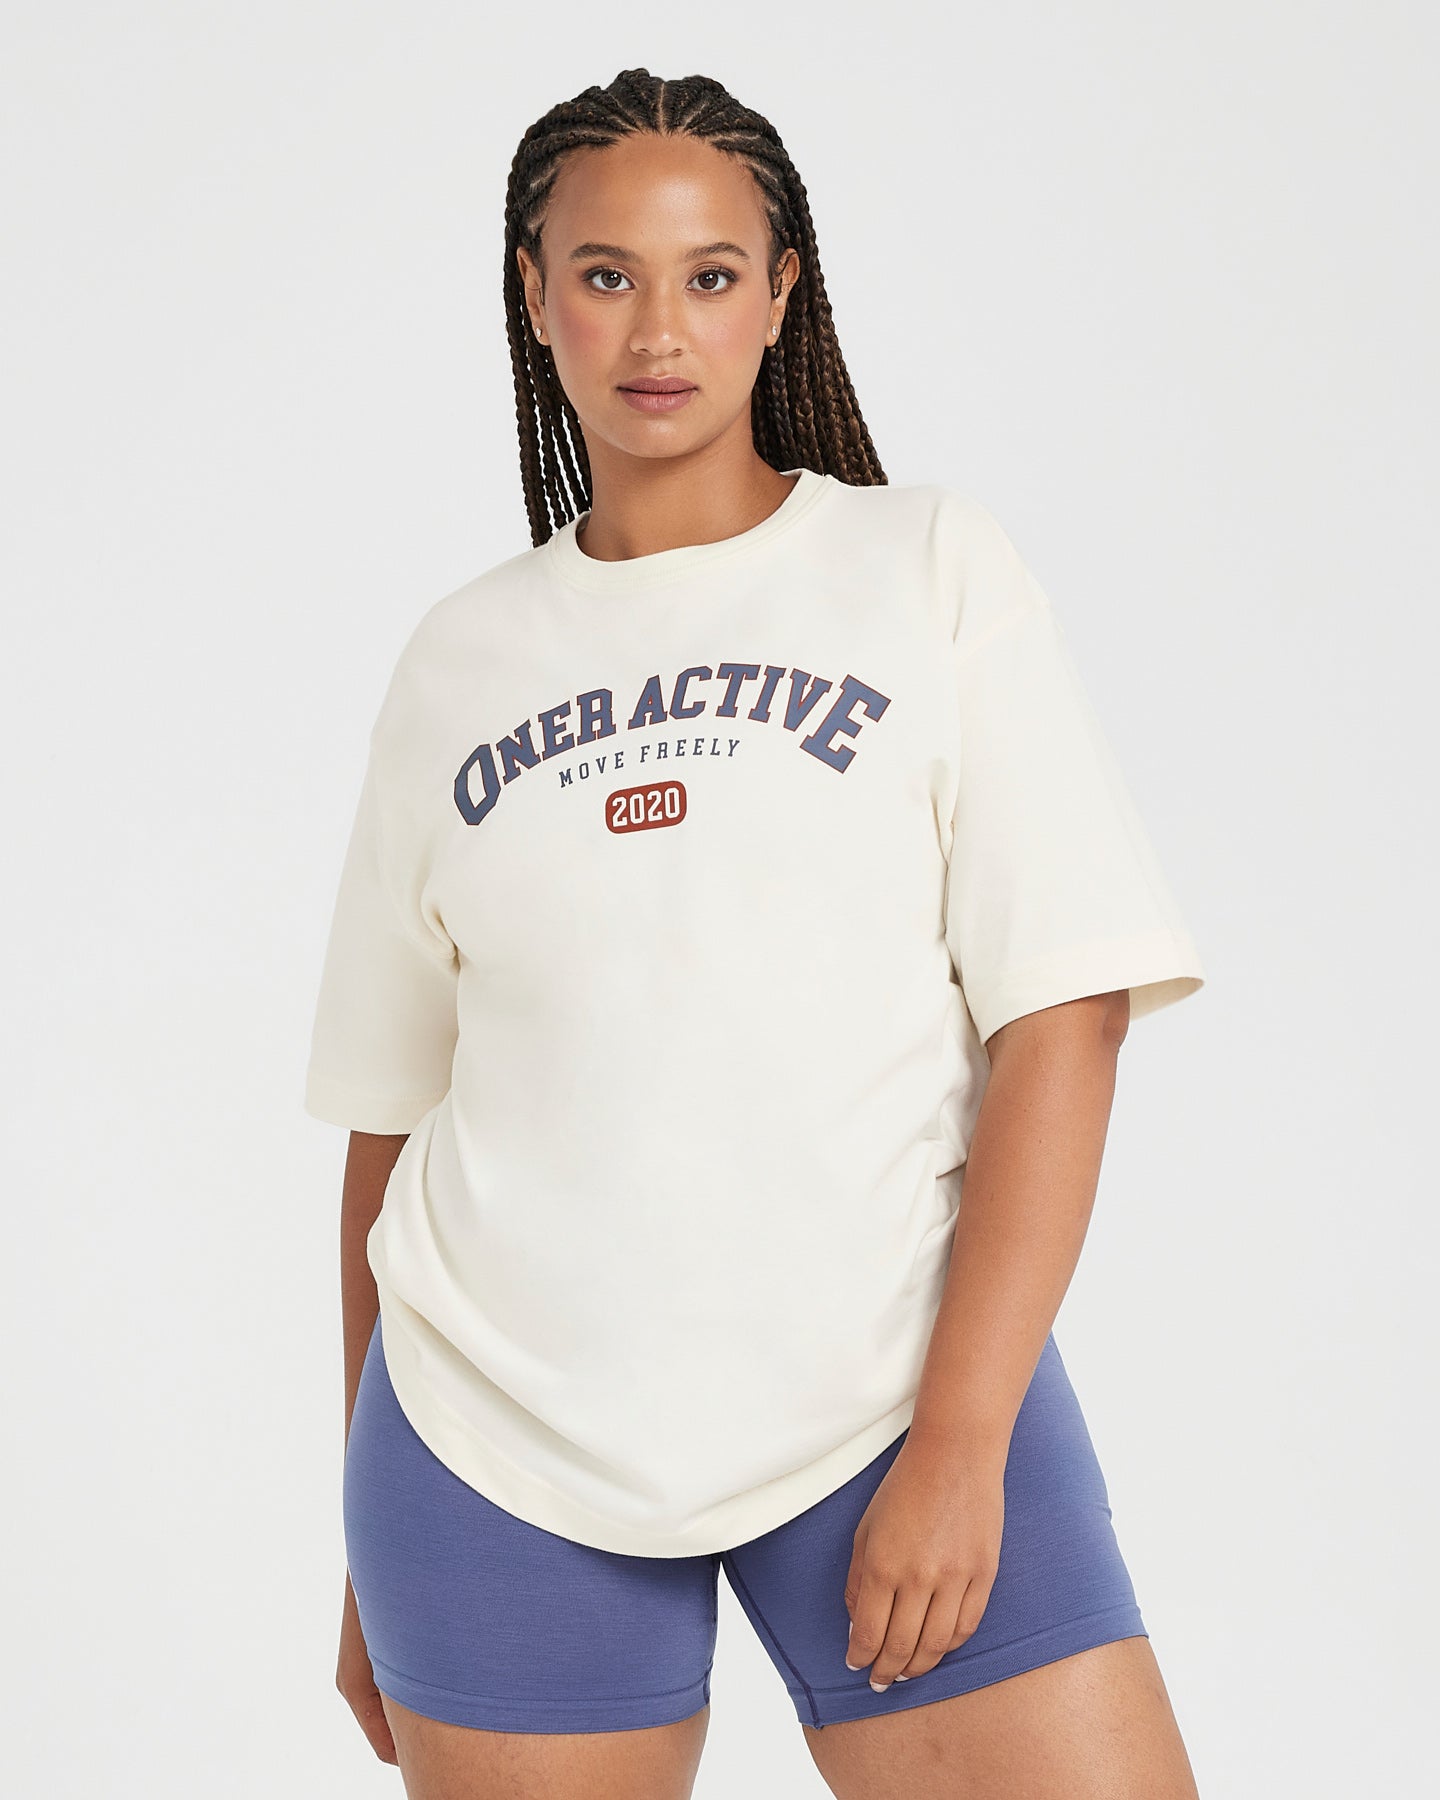 Oversized White Short Sleeve Shirt Club Tee - Women's | Oner Active US